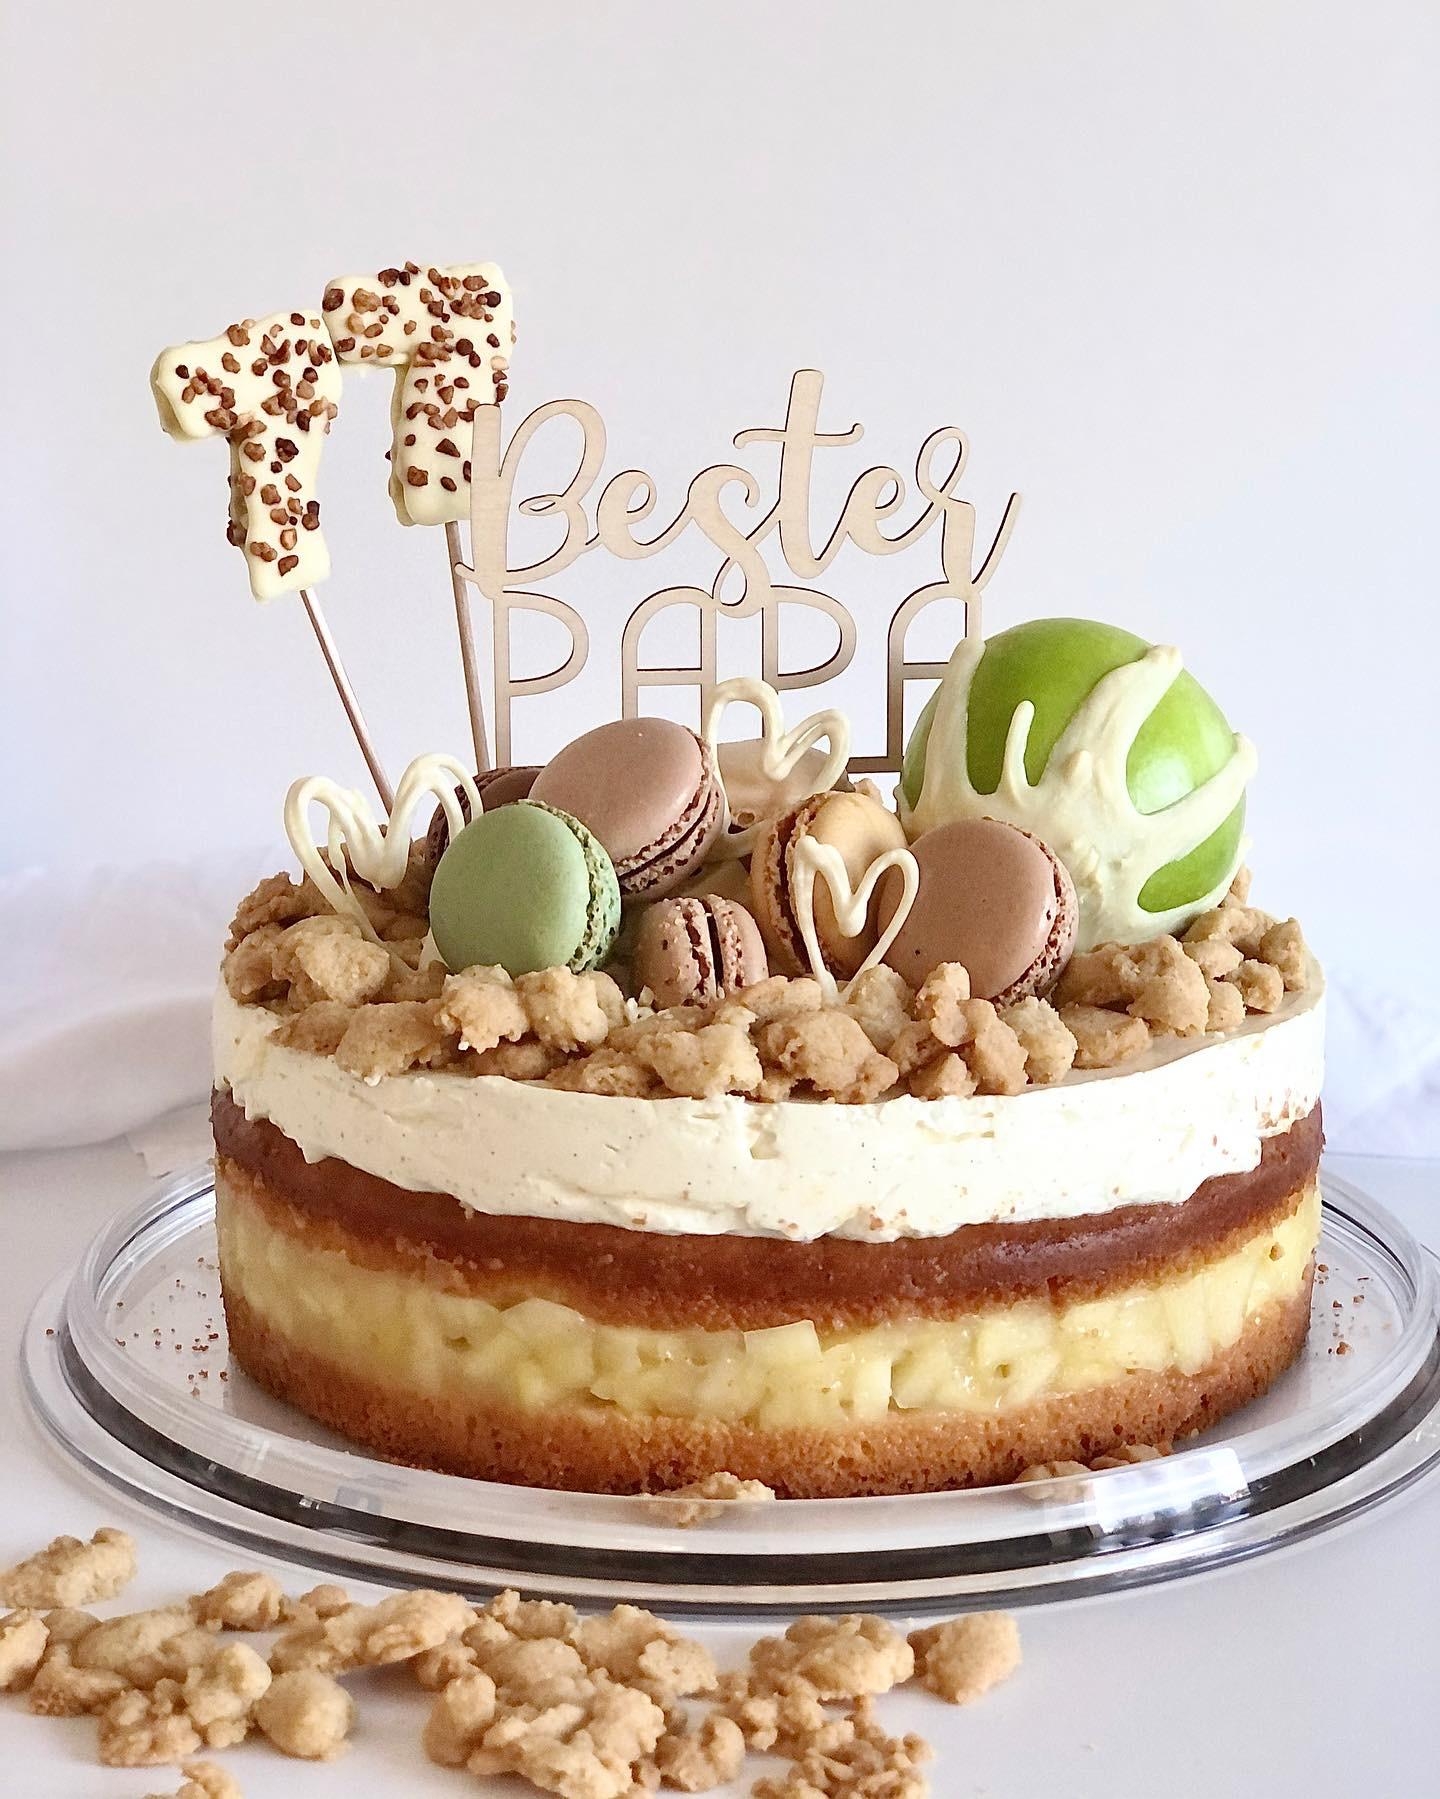 #birthdaycake #cake #kuchen #backen #torte #nakedcake #bakery #food #foodstyling #couchstyle #home #partyfood #birthday